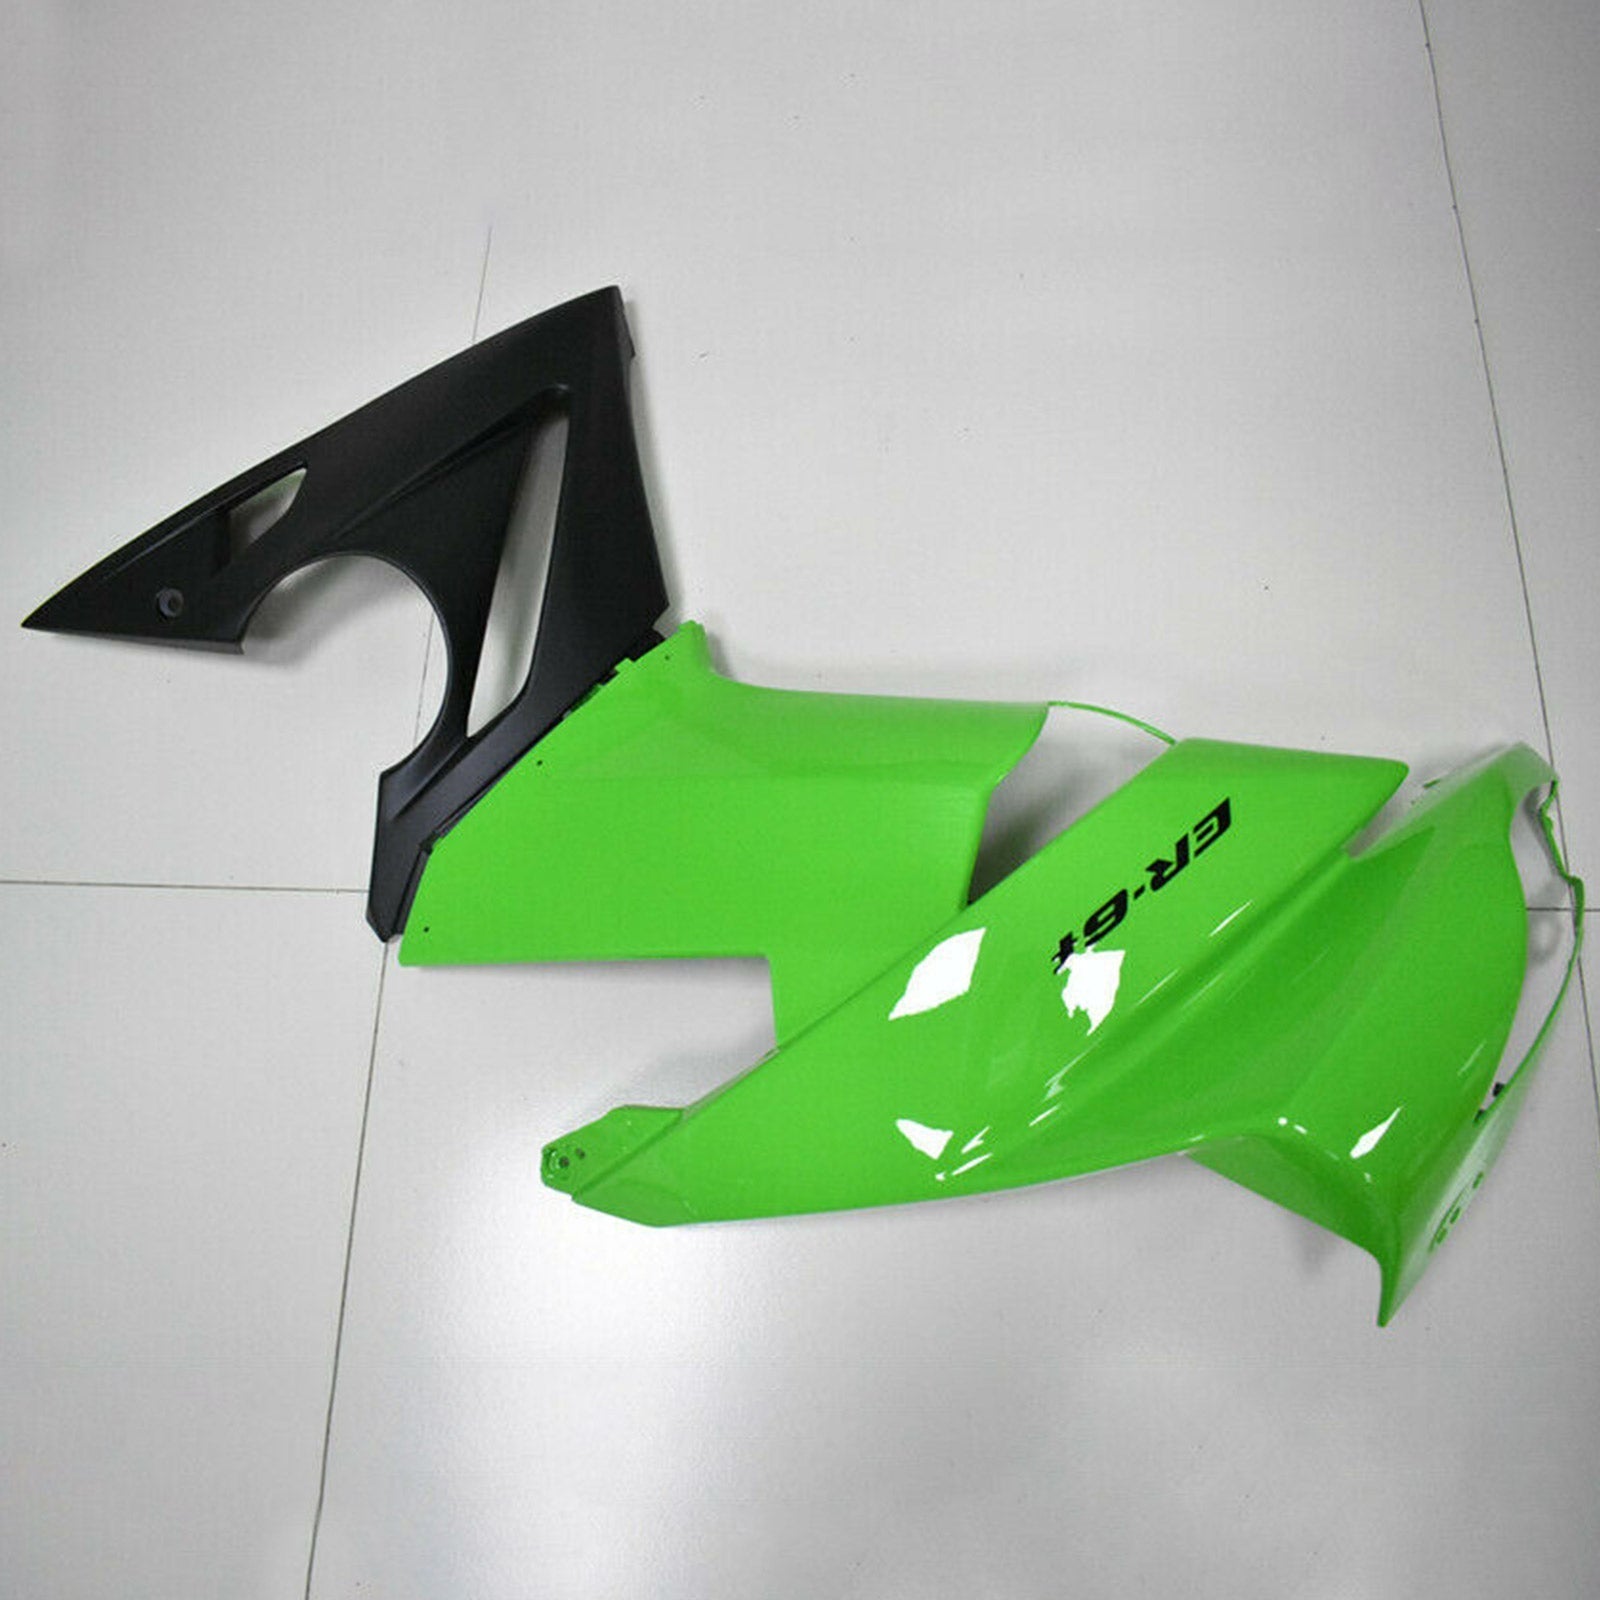 Amotopart Kit carenatura in plastica per Kawasaki Ninja 650 ER-6F EX650 2009-2011 04# Generico